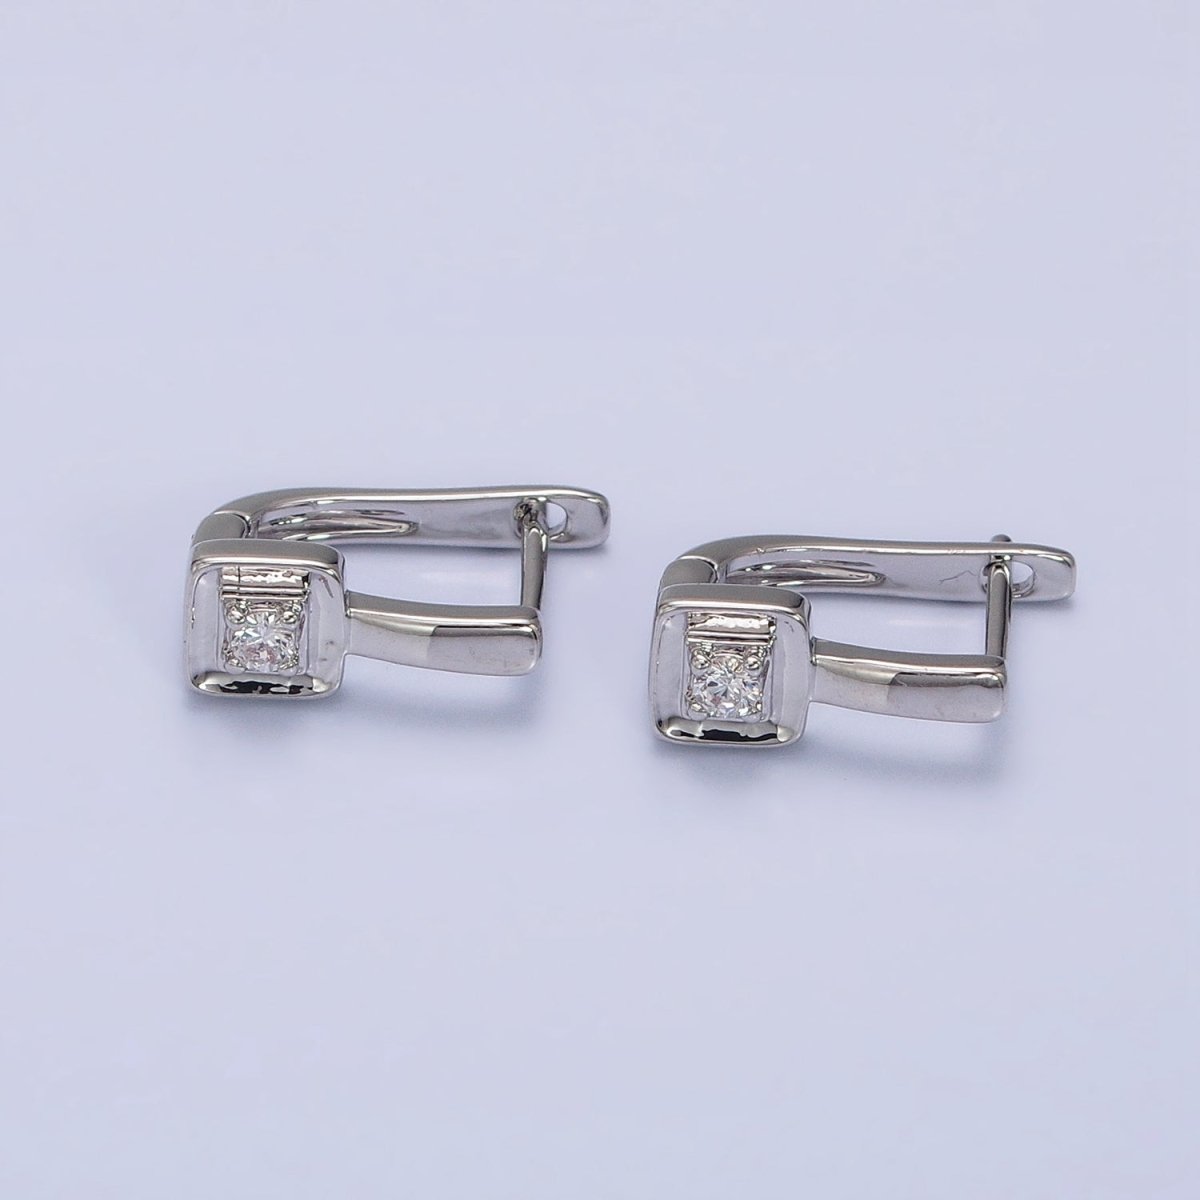 Silver 16mm U-Shaped Oblong Square CZ Geometric English Lock Earrings | AB1550 - DLUXCA